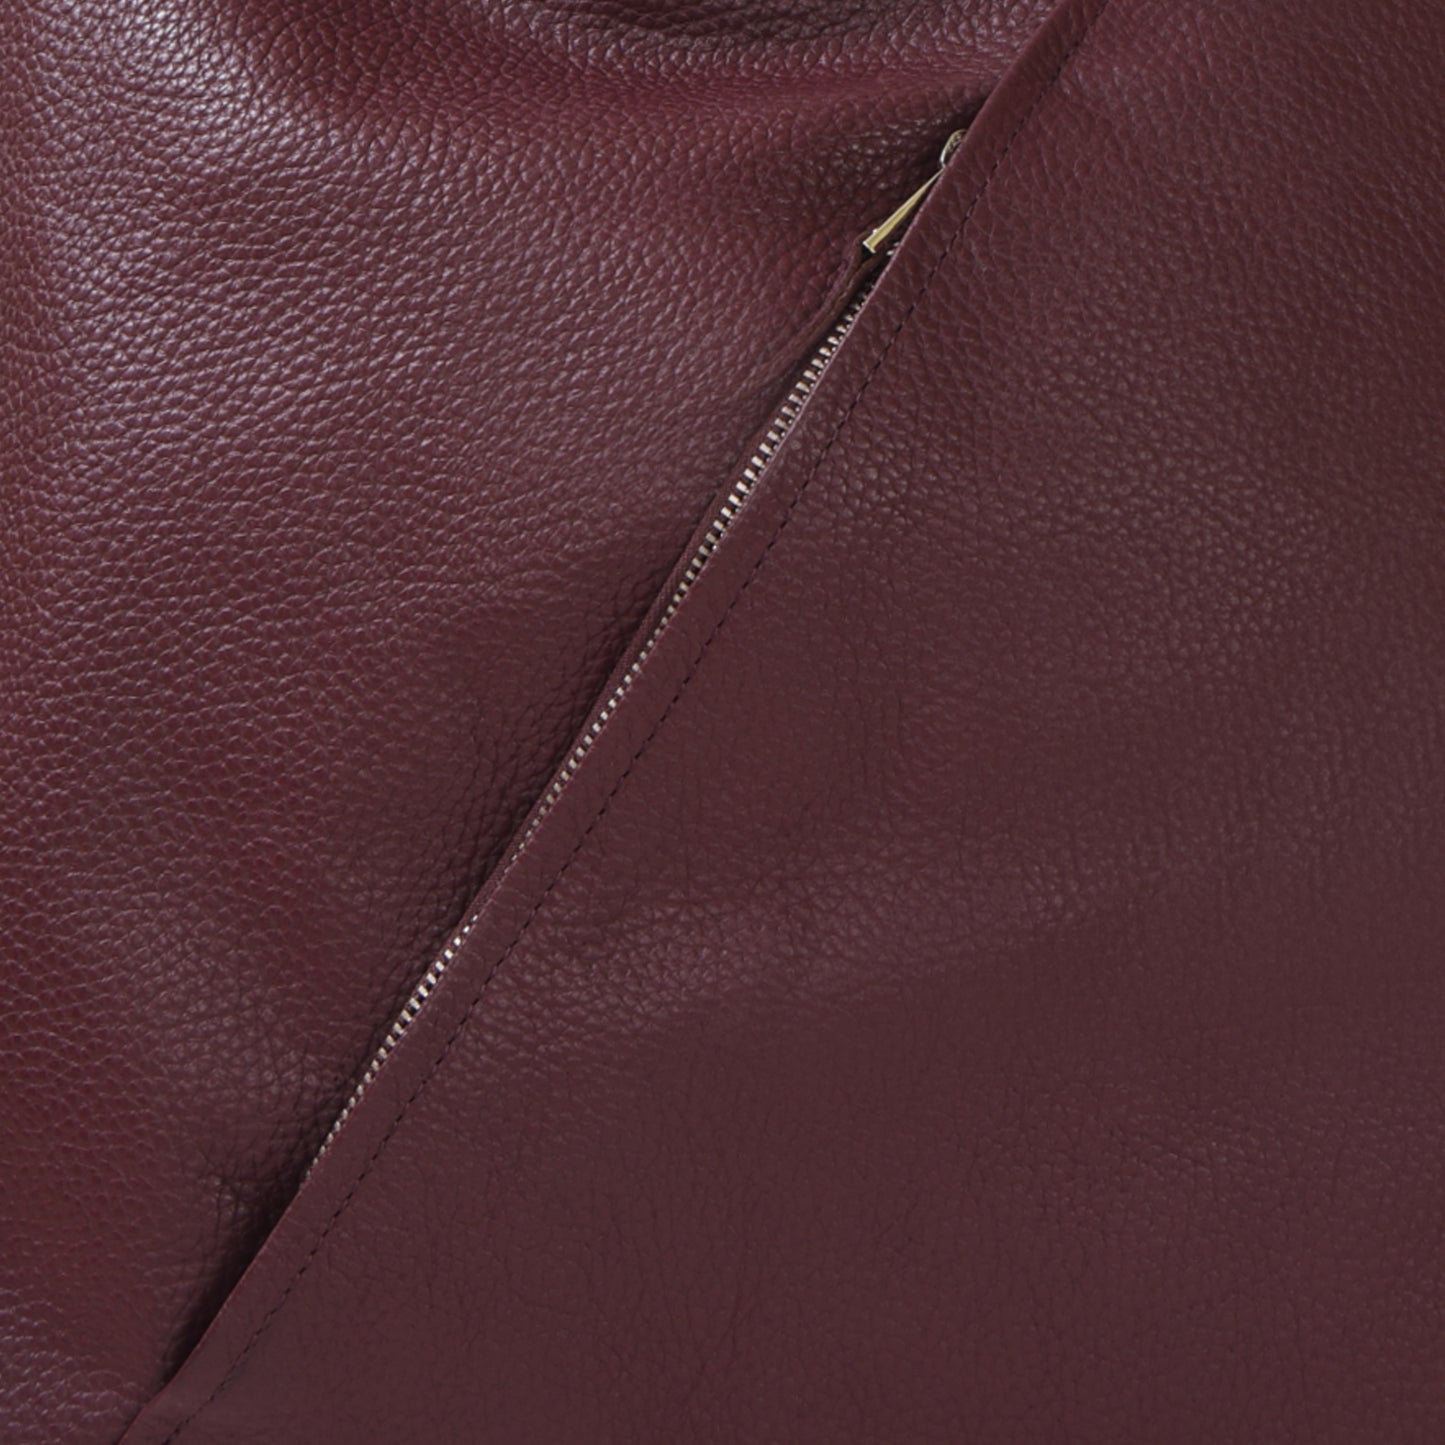 Maroon Zip Leather Shoulder Hobo Bag Brix and Bailey Ethical Handbag Brand